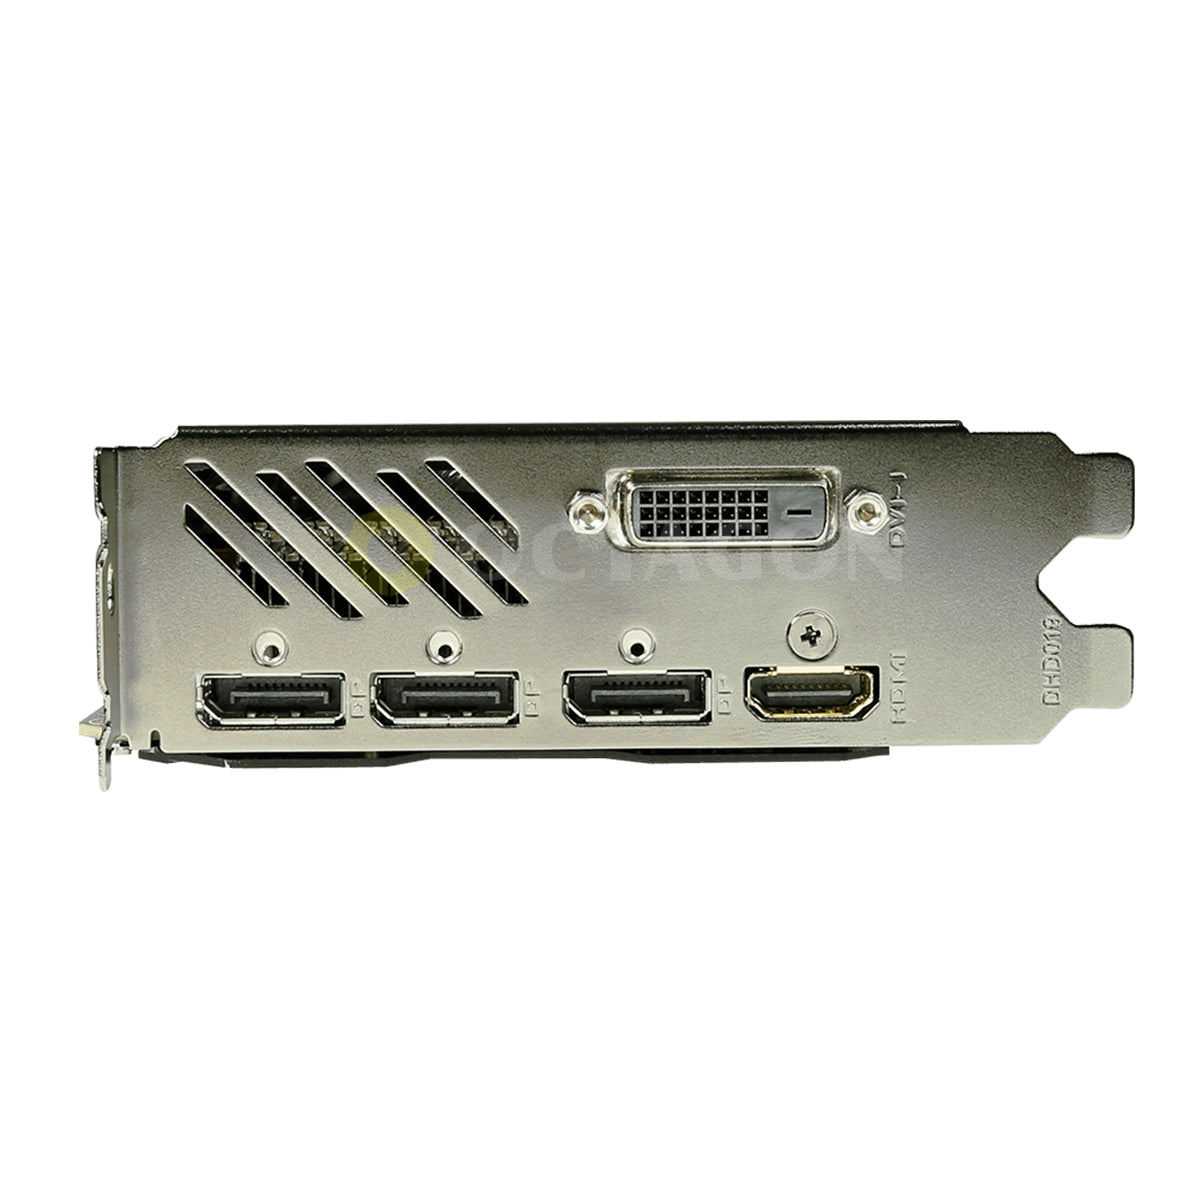 GIGABYTE RADEON RX570 GAMING 8GB DDR5